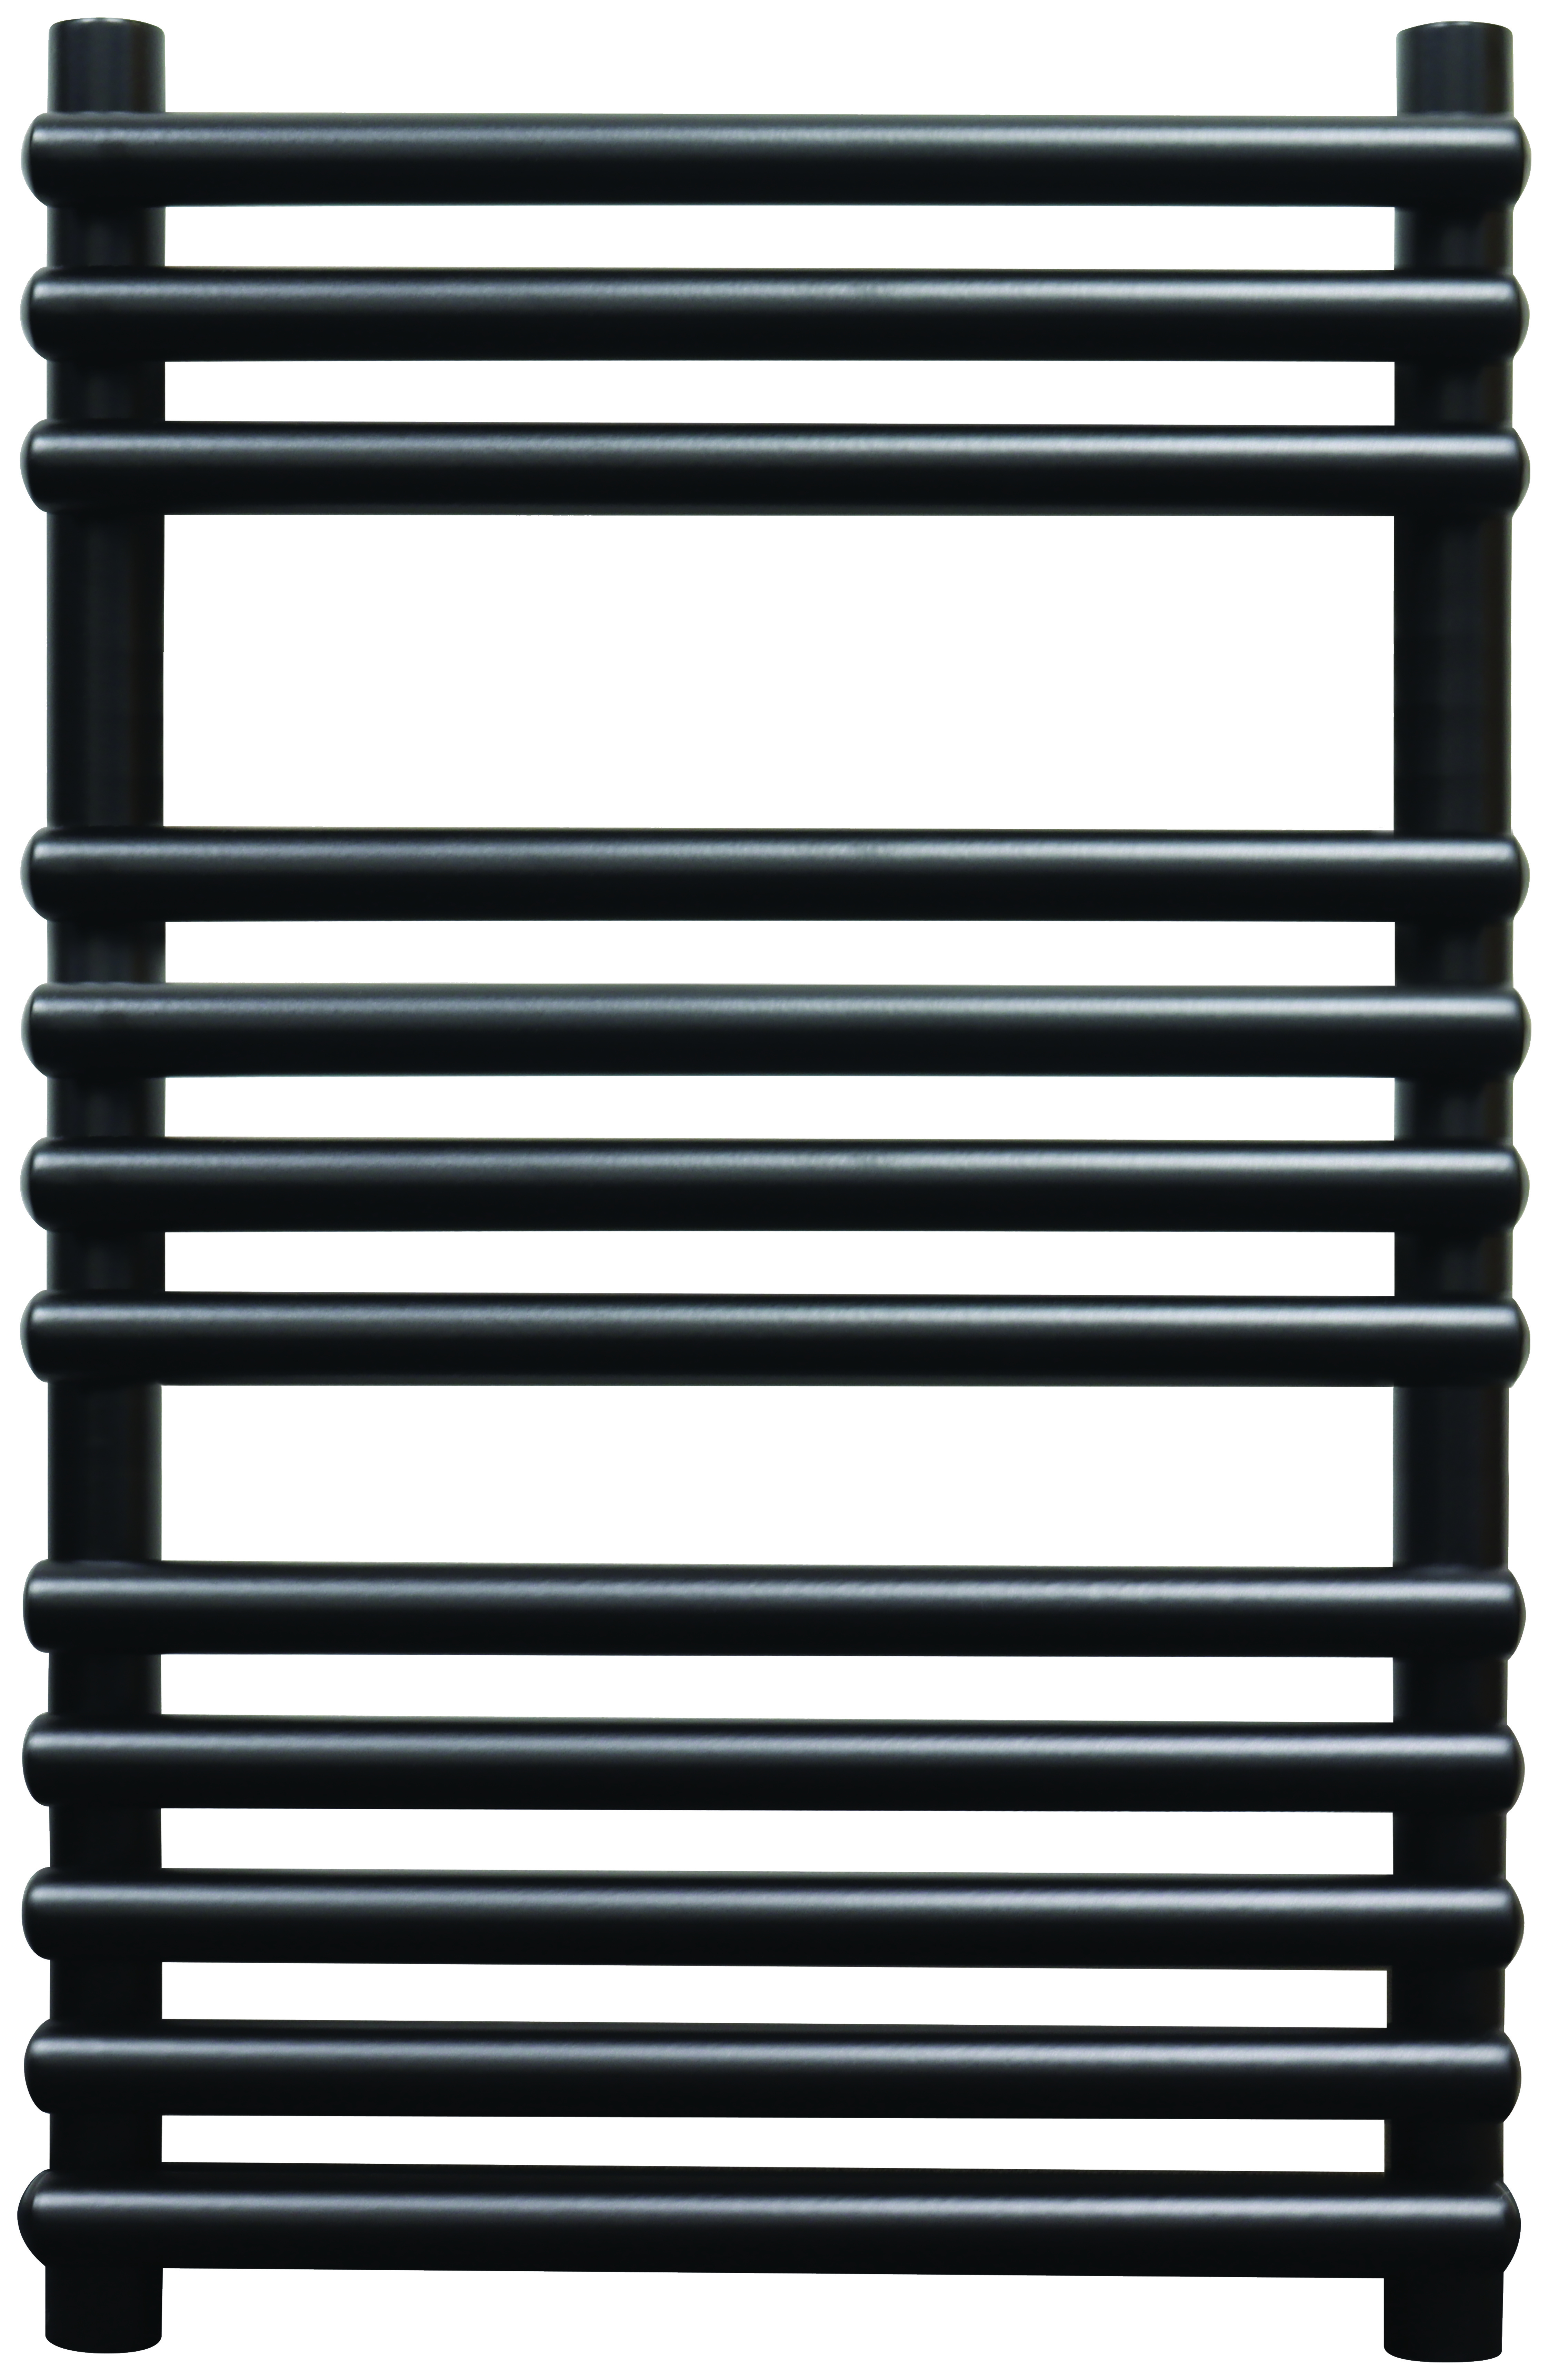 Towelrads Double Iridio Matt Black Towel Radiator - 1200 x 500mm